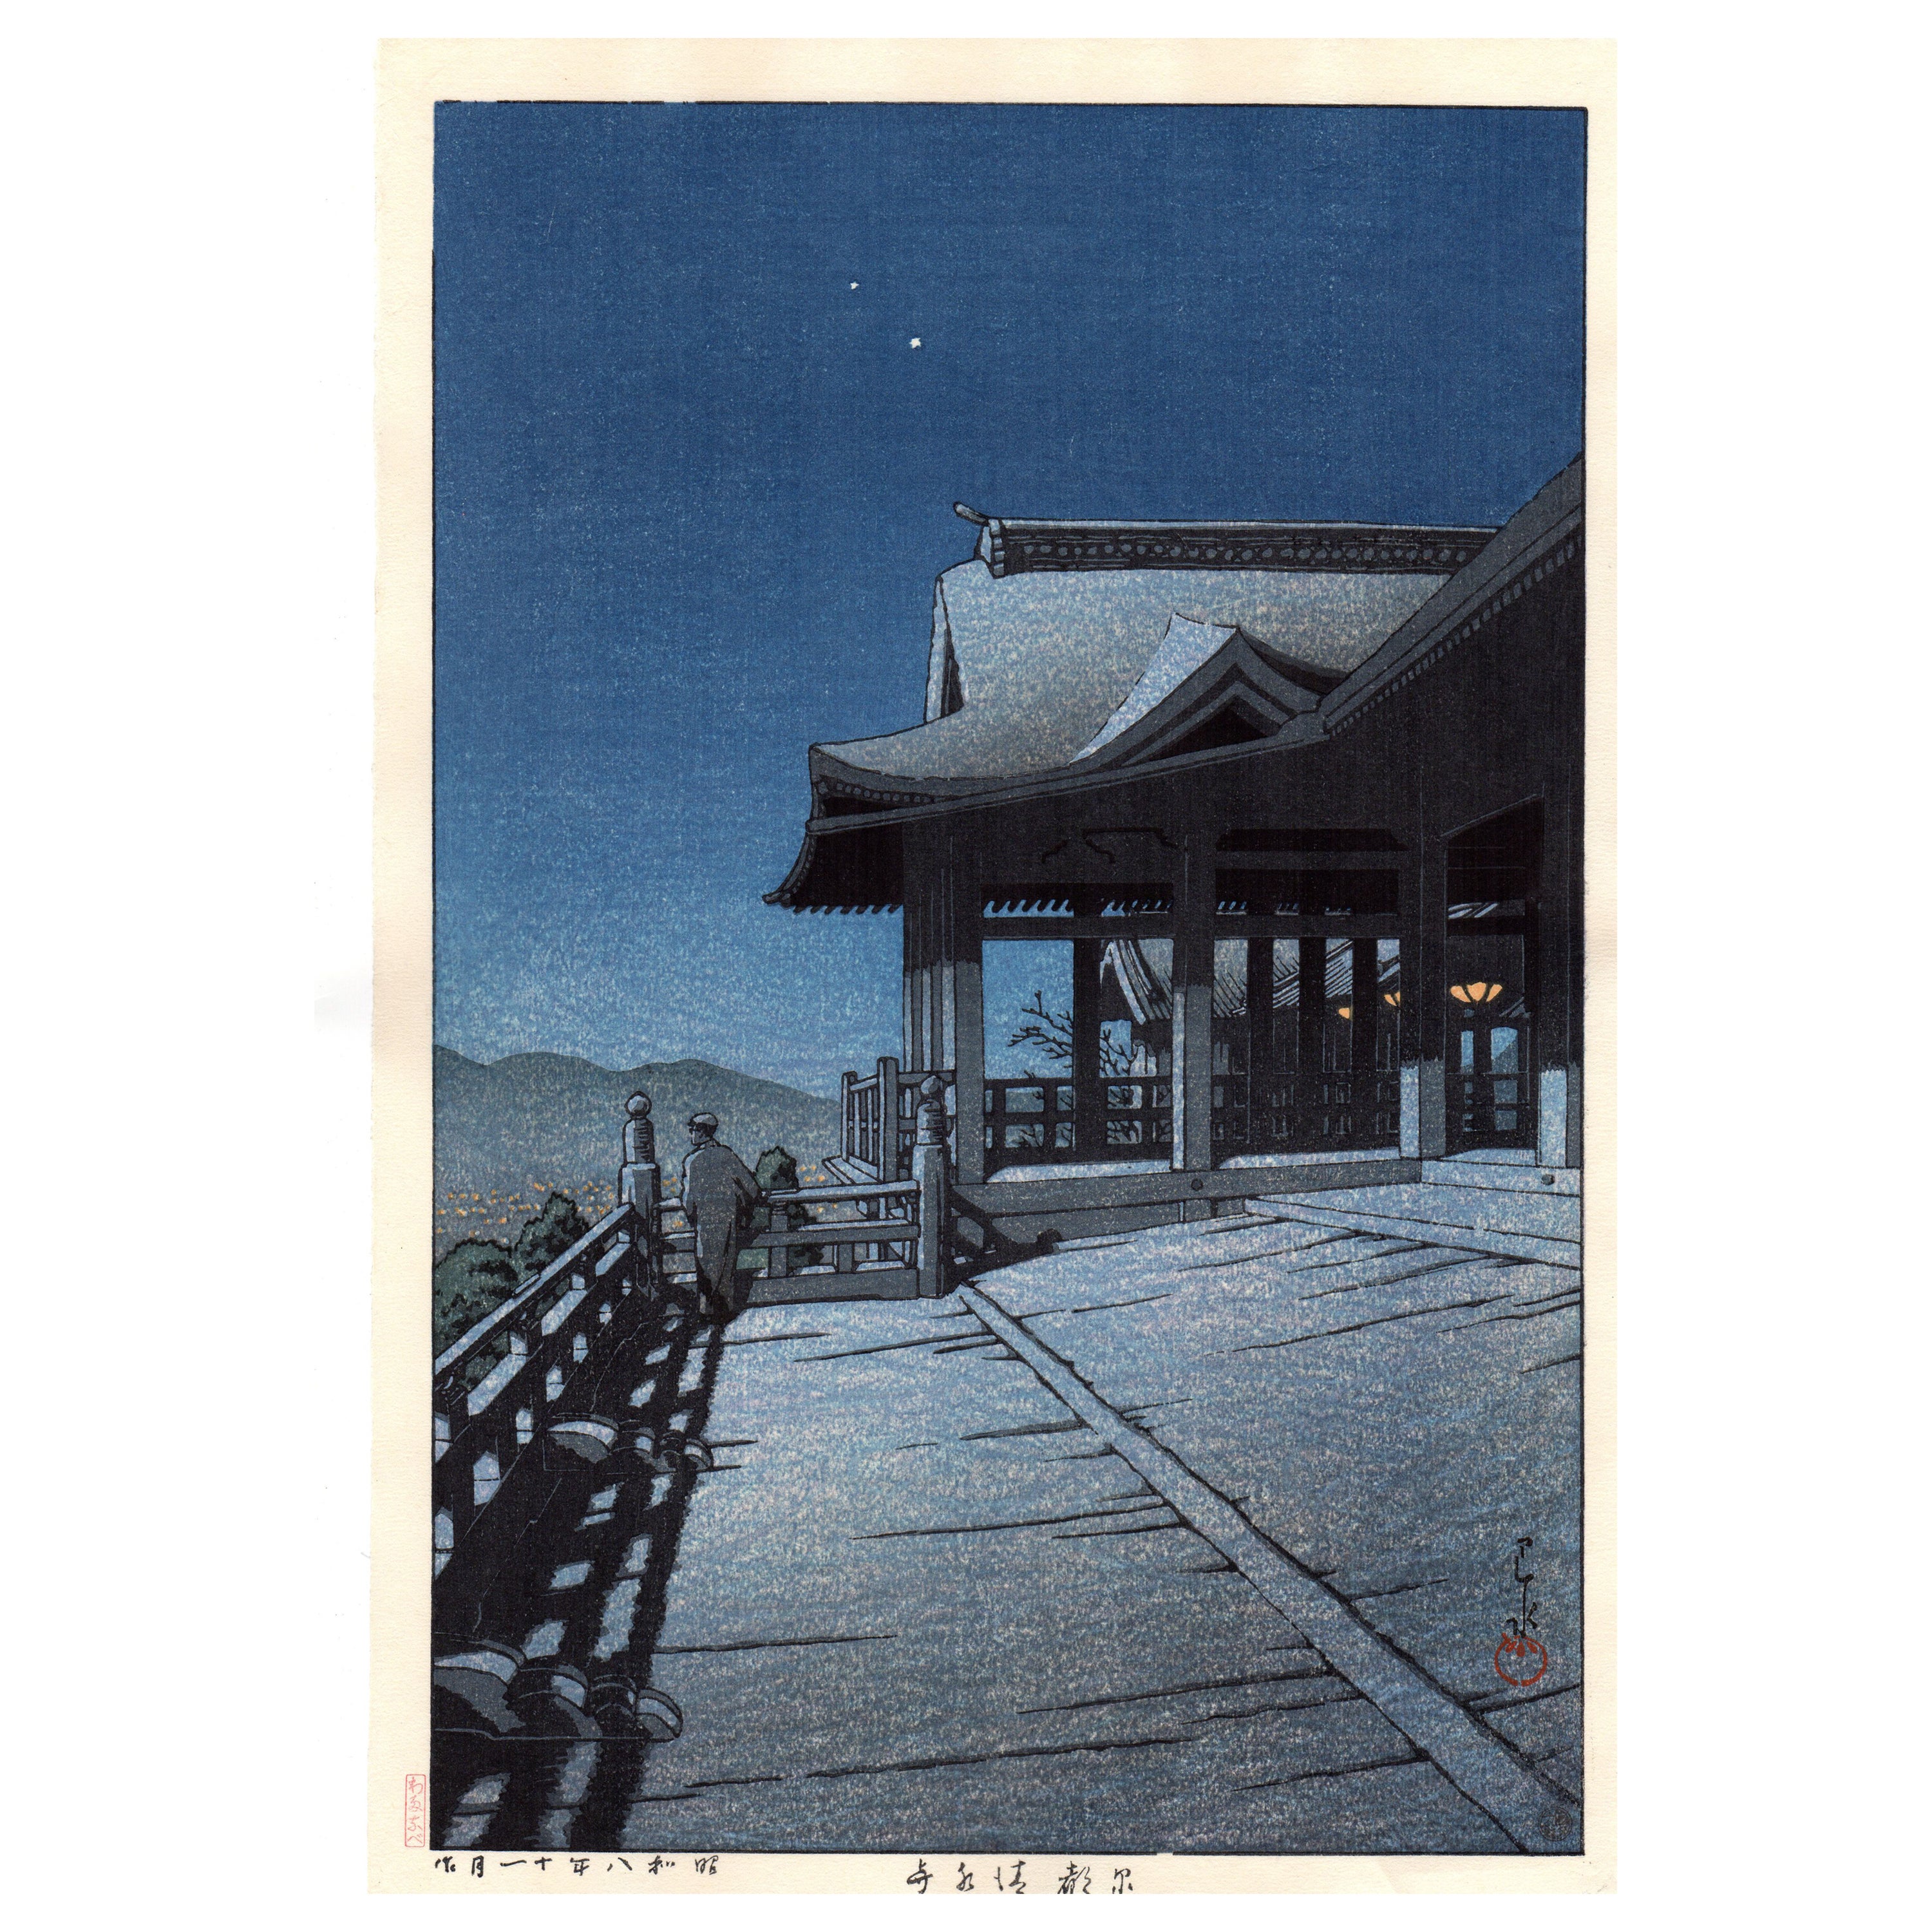 Authentic Japanese Woodblock Print by Kawase Hasui - Kiyomizu Temple in Kyoto